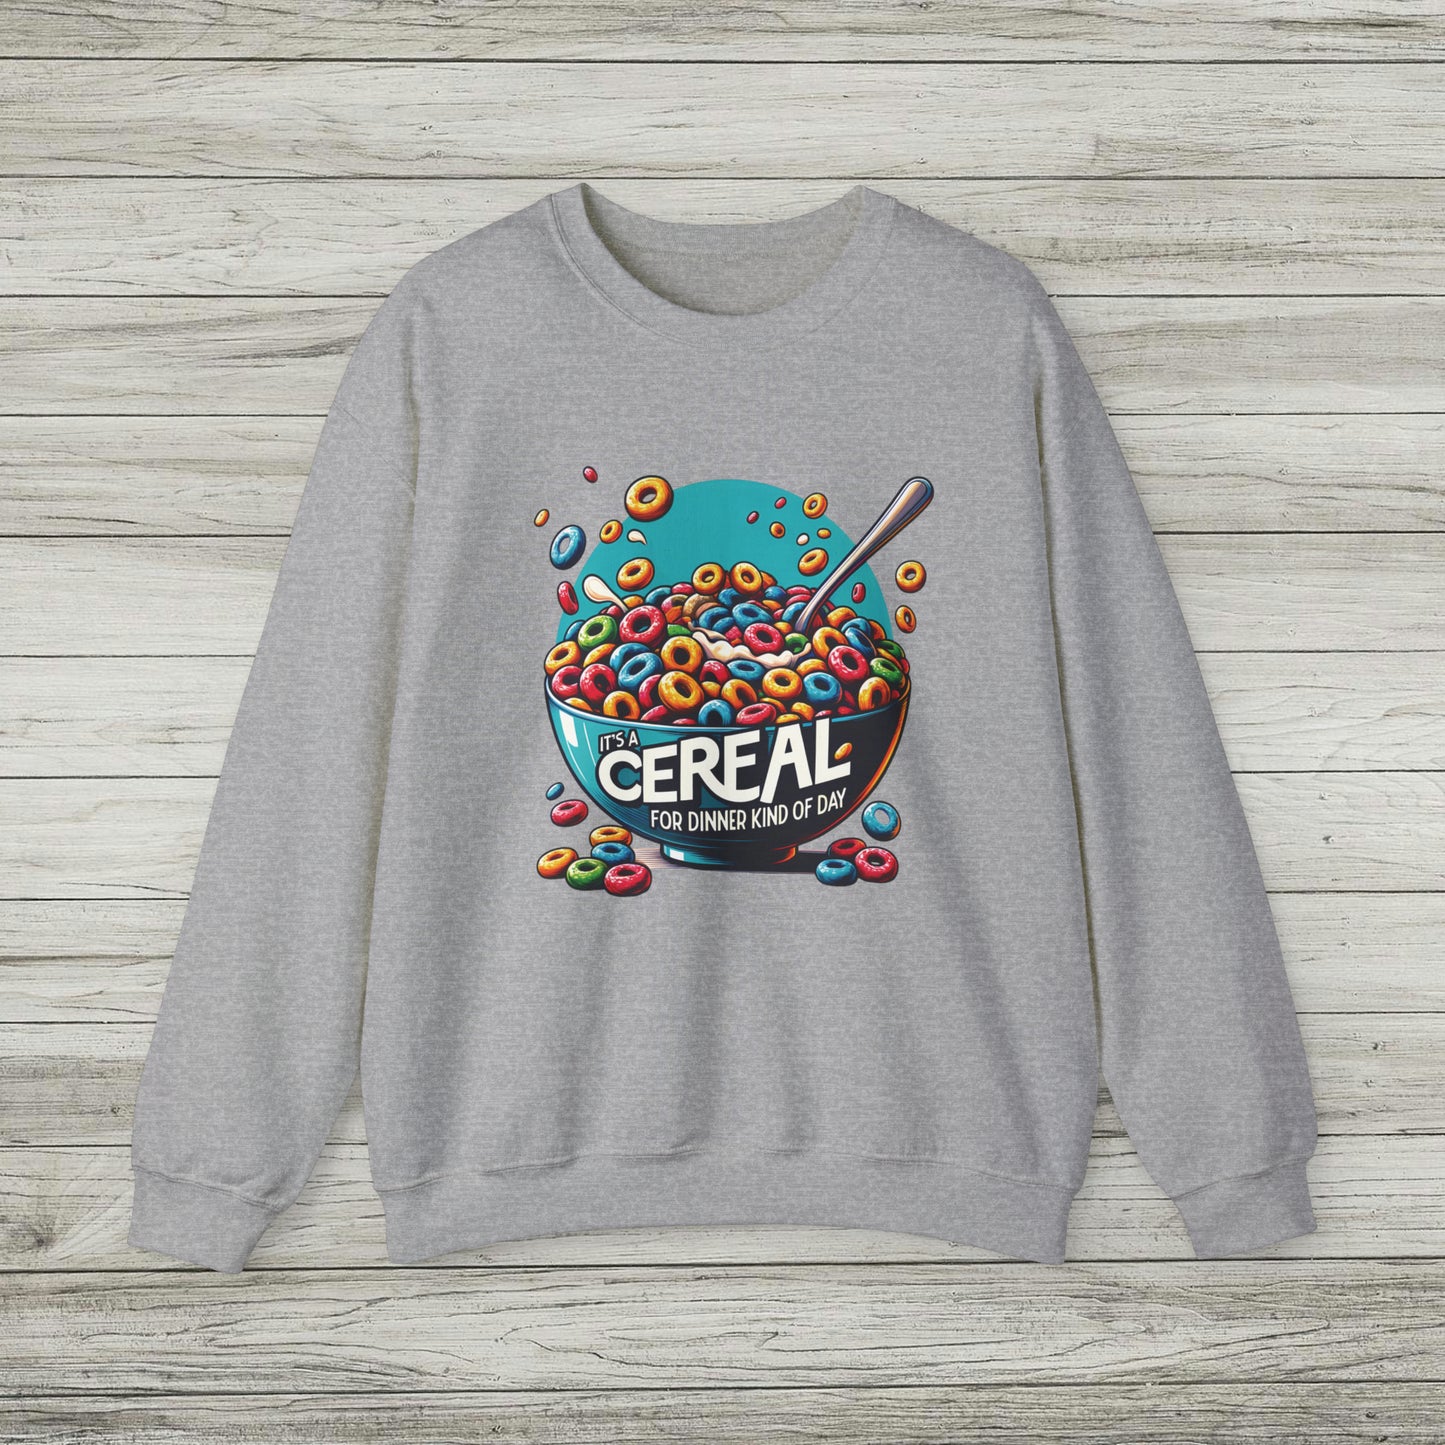 Cereal for Dinner Sweatshirt, Girl Dinner Crewneck, Funny Bad Day Shirt